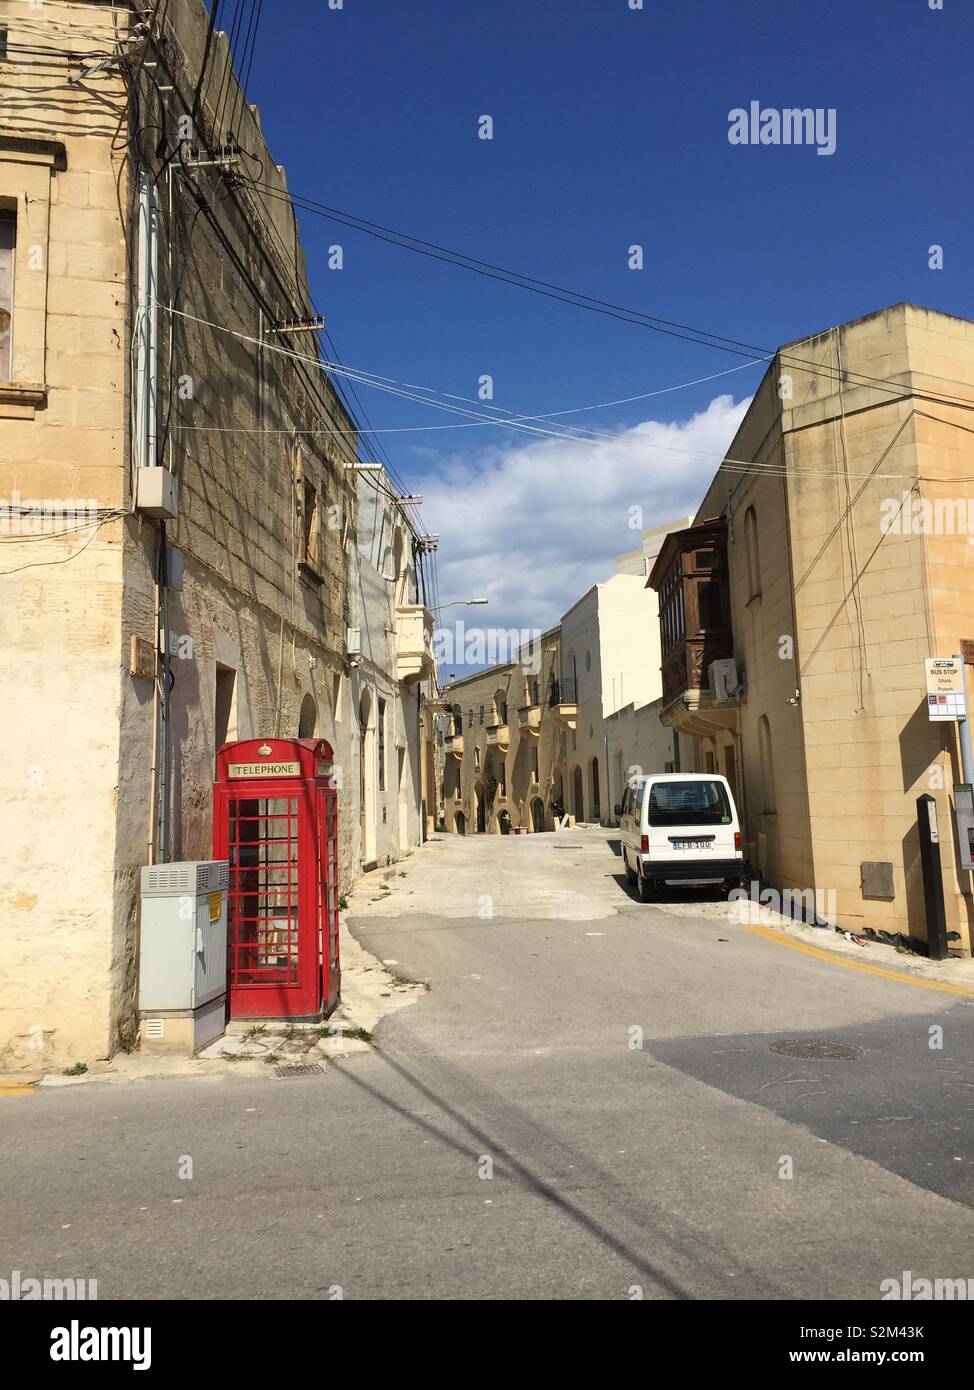 British Telephone Box in Street on Mediterranean Island of Gozo. Stock Photo